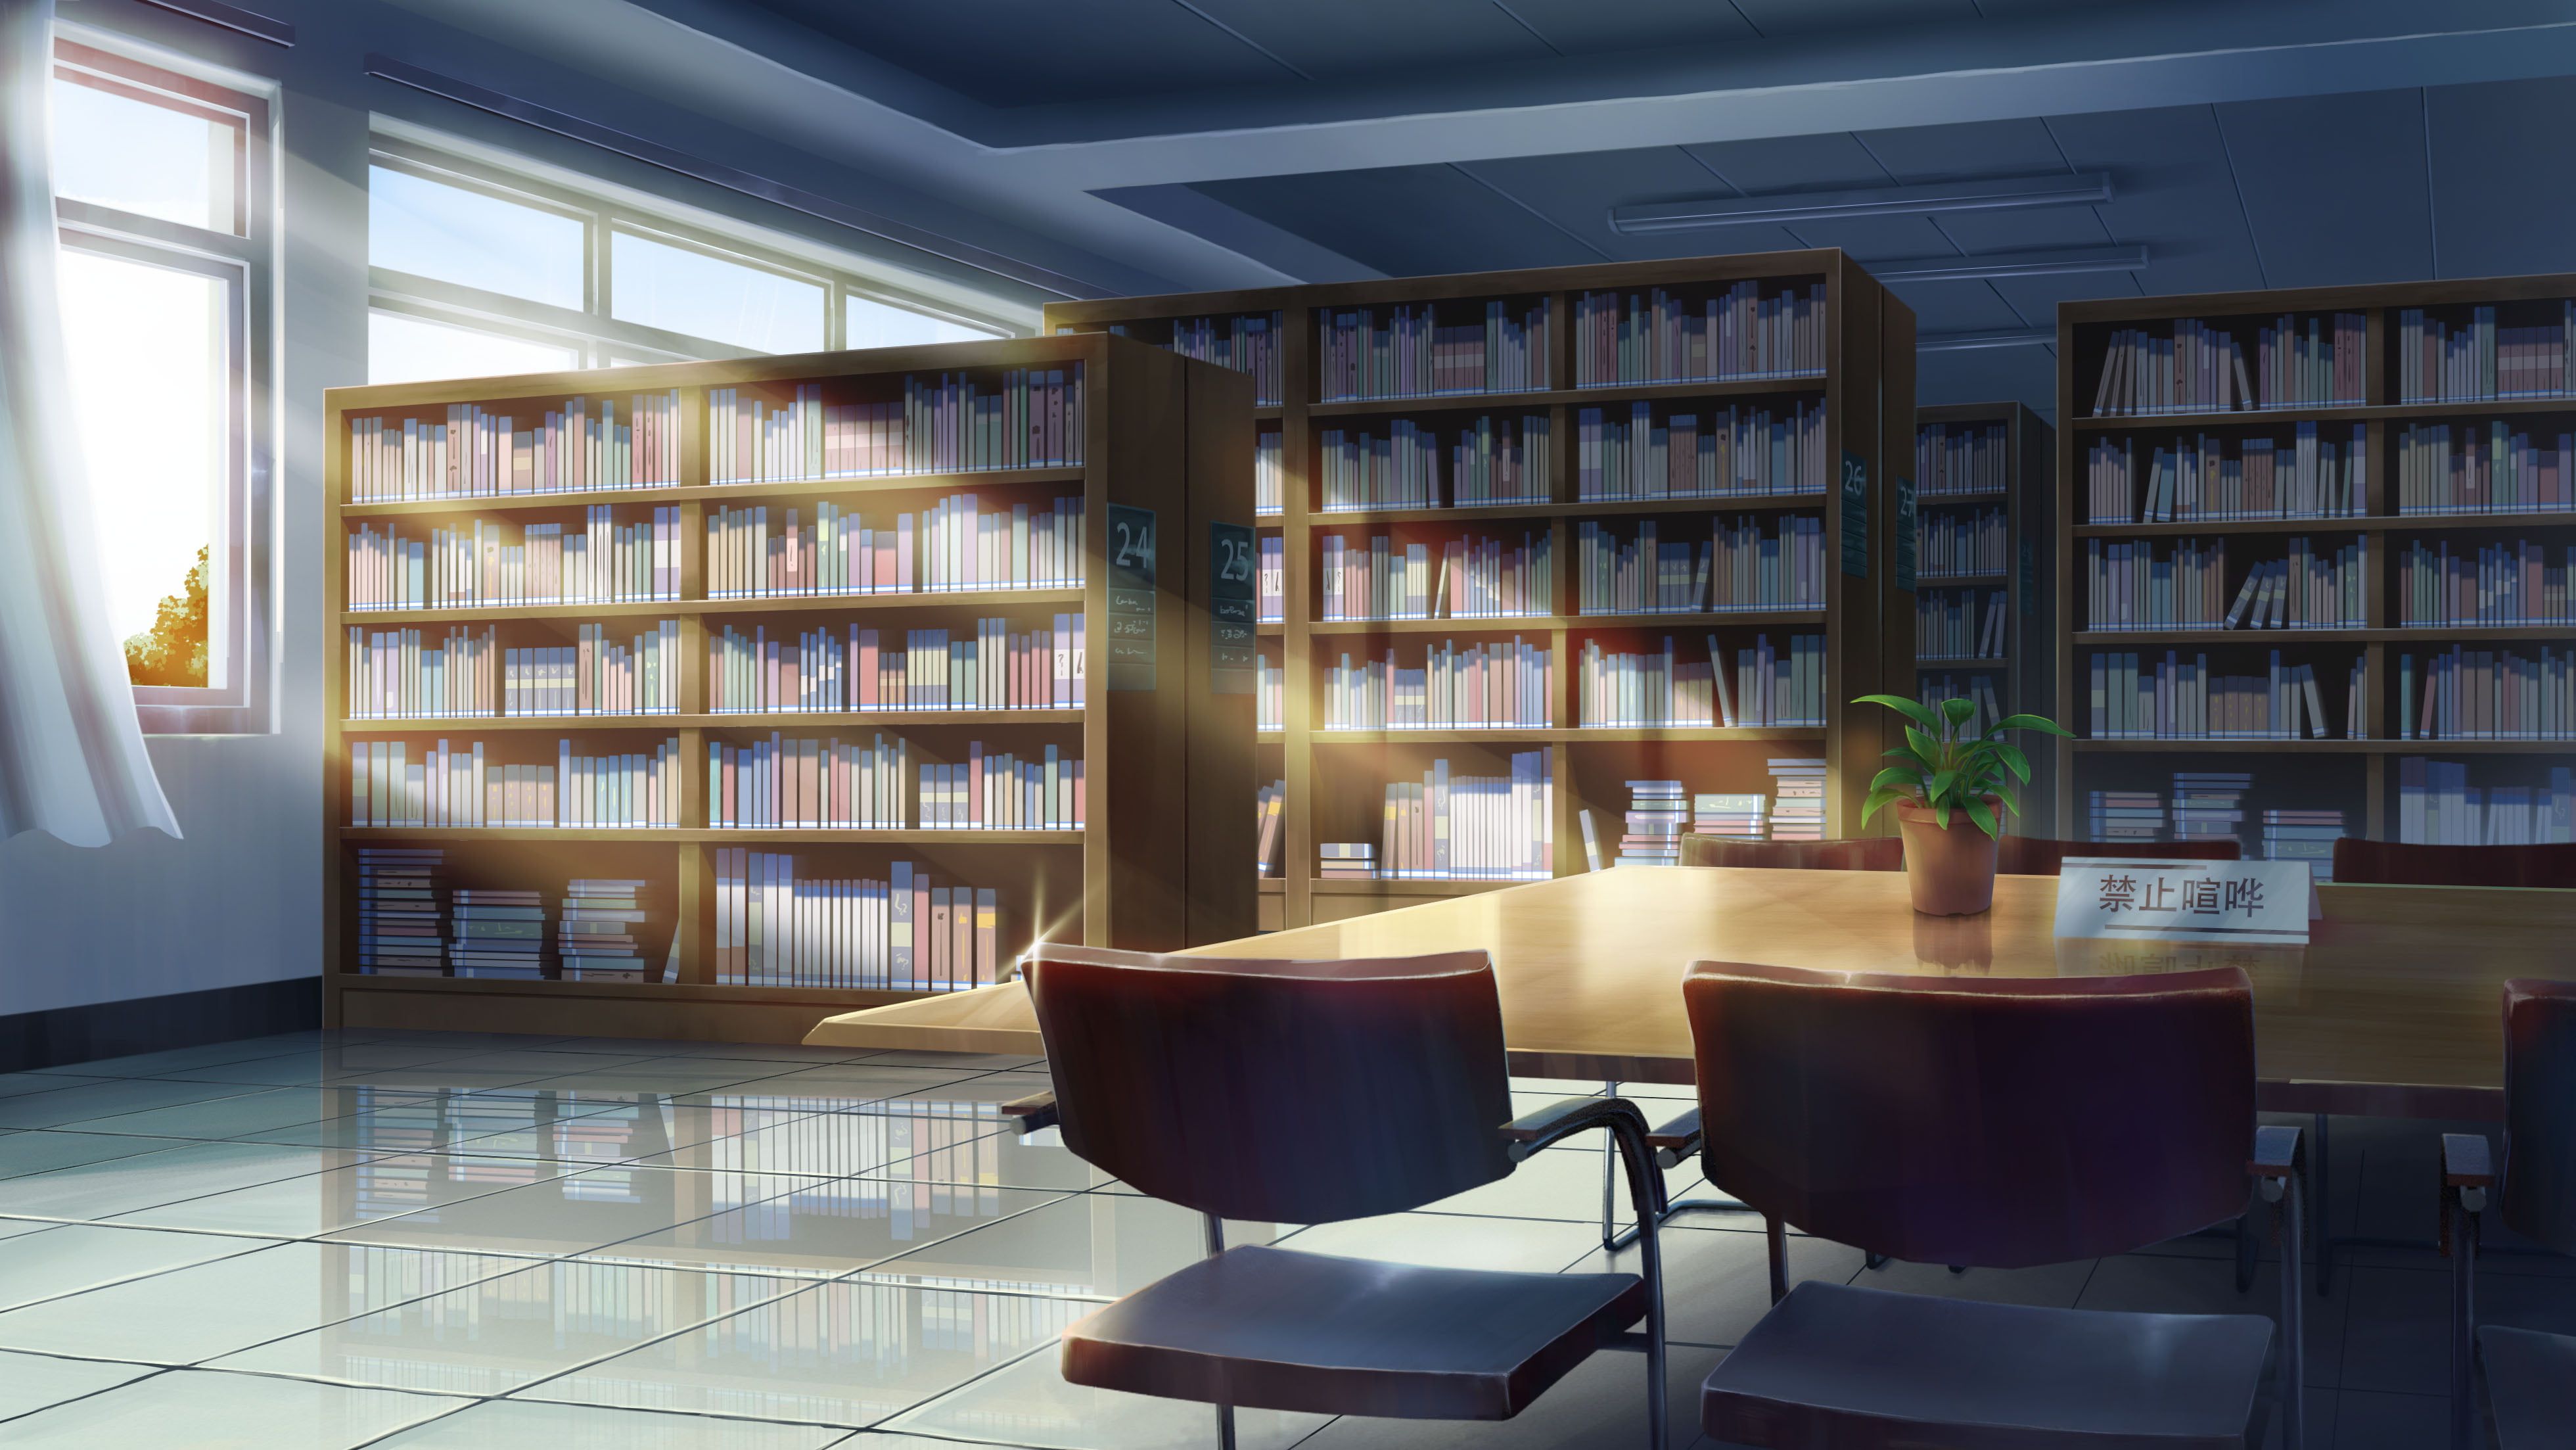 Anime #Original #Book #Chair #Library K #wallpaper #hdwallpaper #desktop. The originals, Brown wooden bed, Glass cabinets display